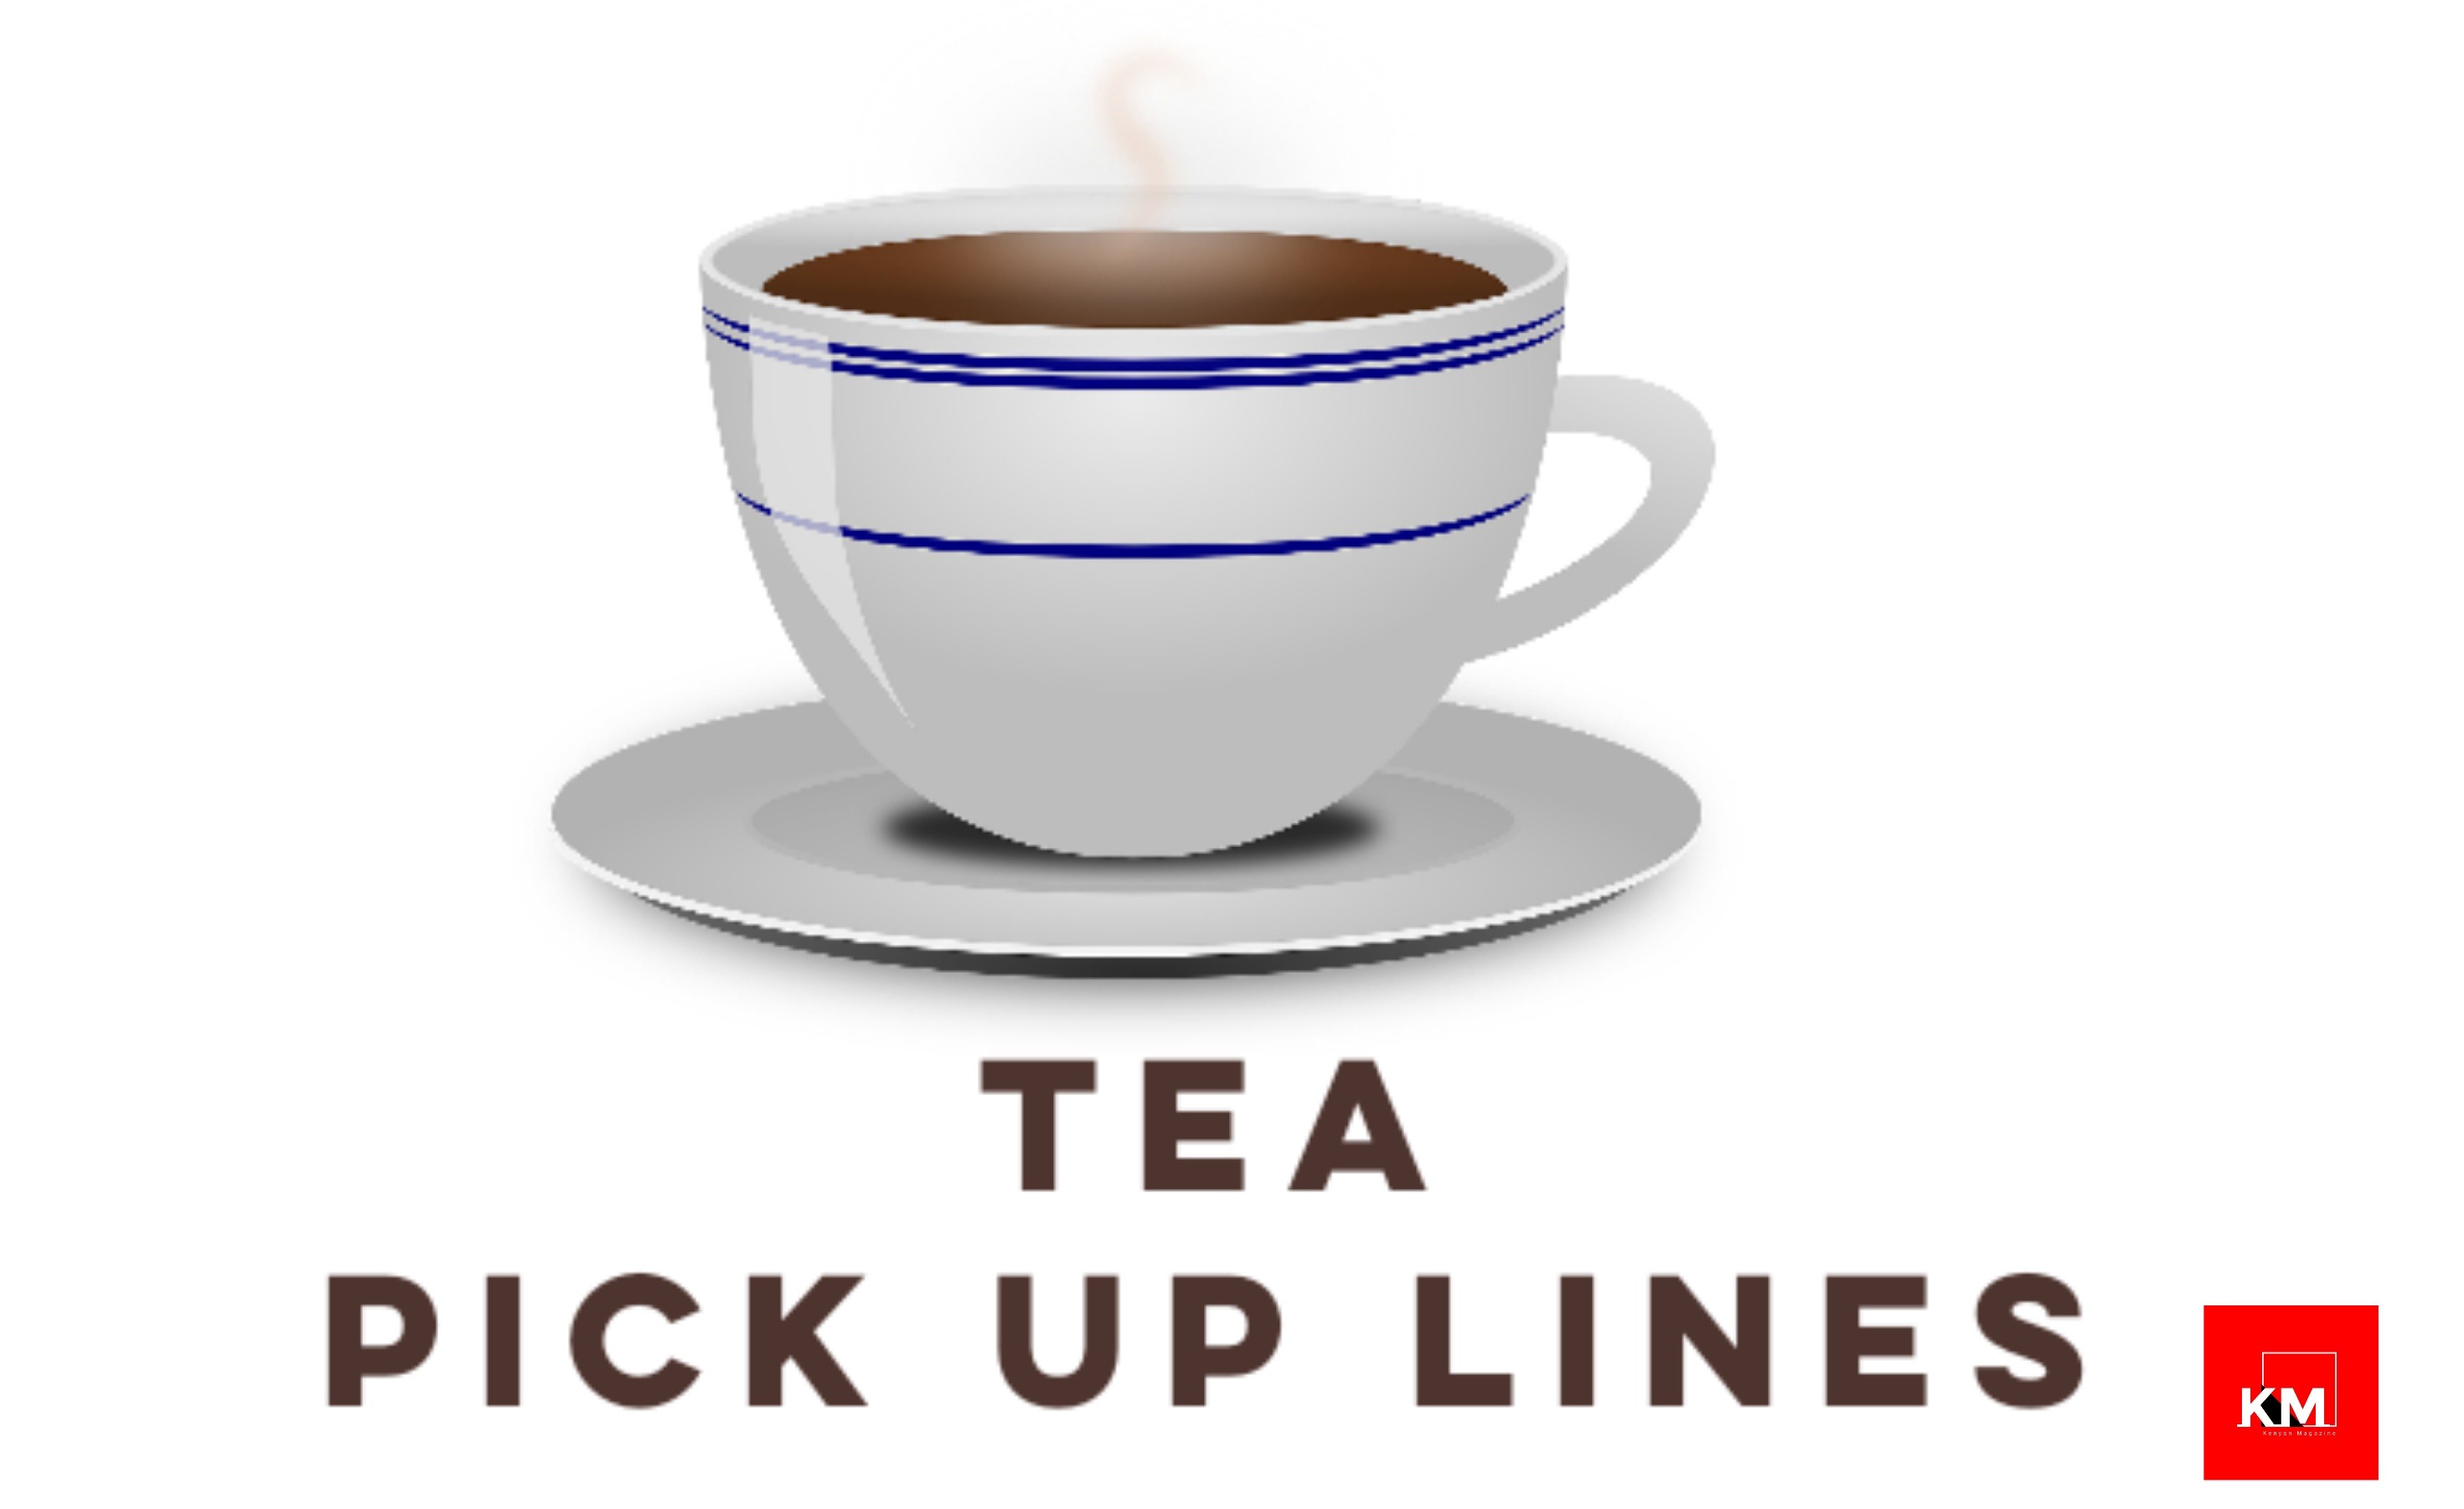 Tea Pick up lines